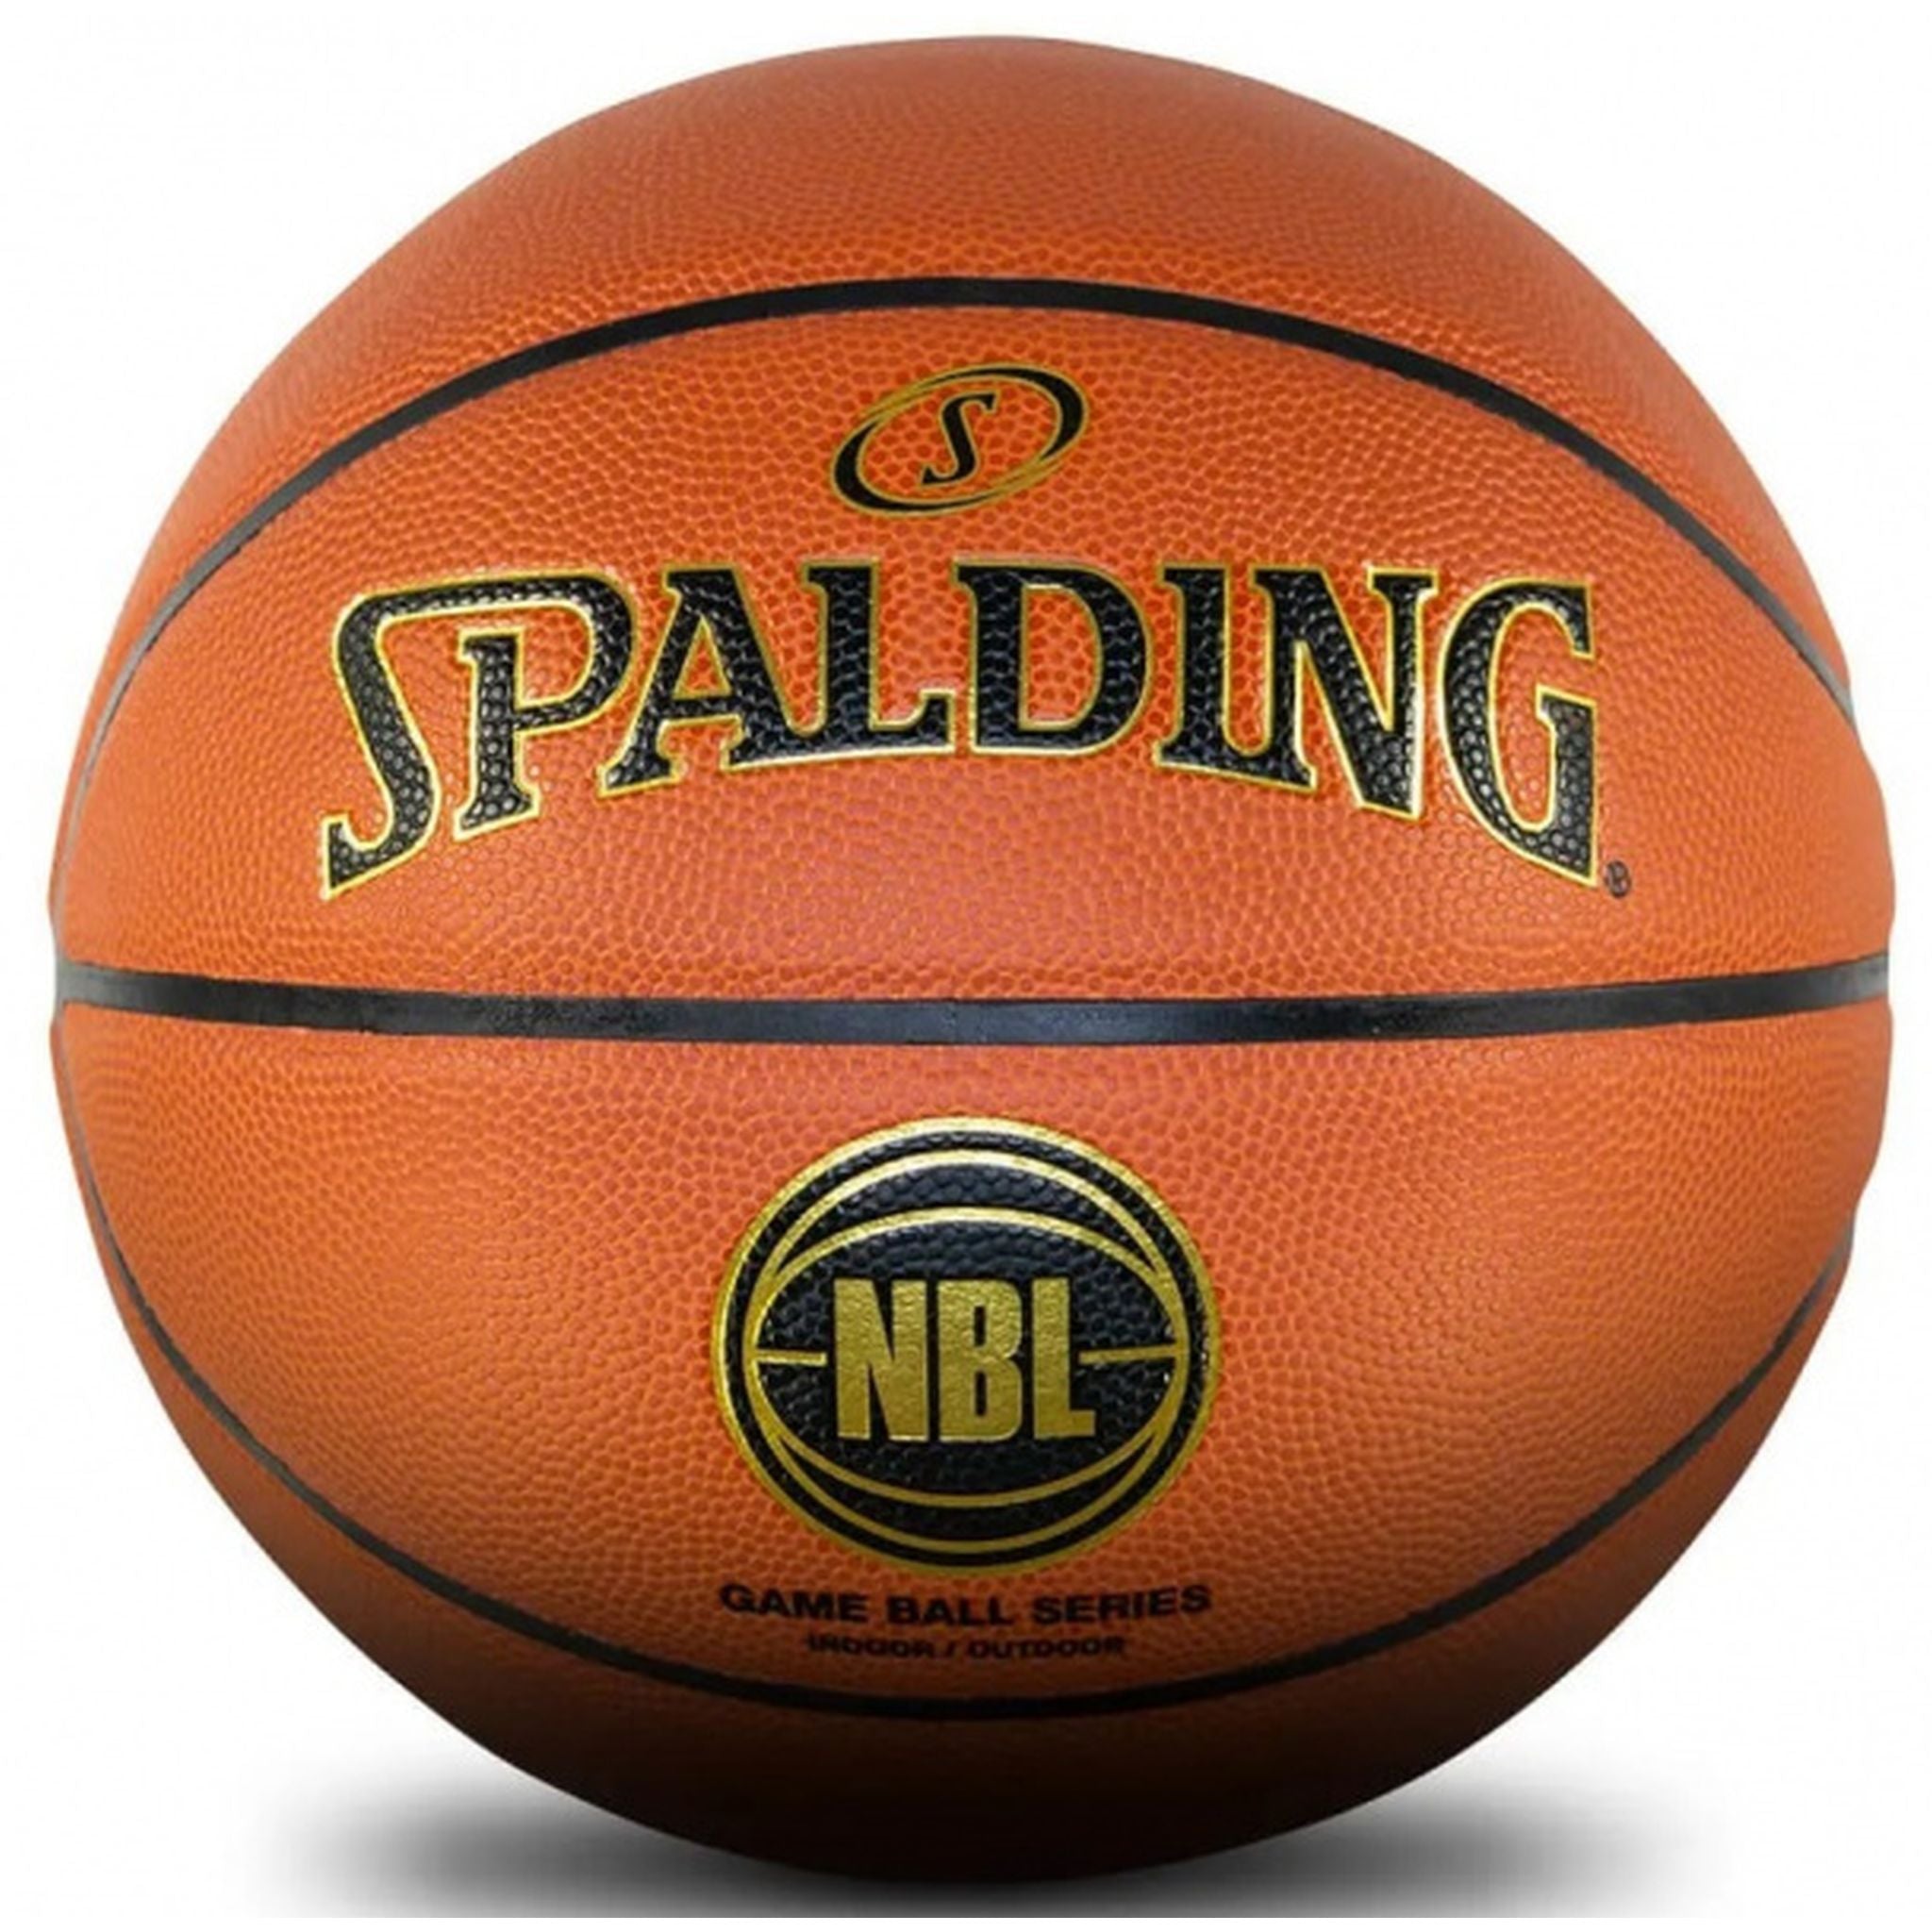 Spalding NBL Replica Game Ball